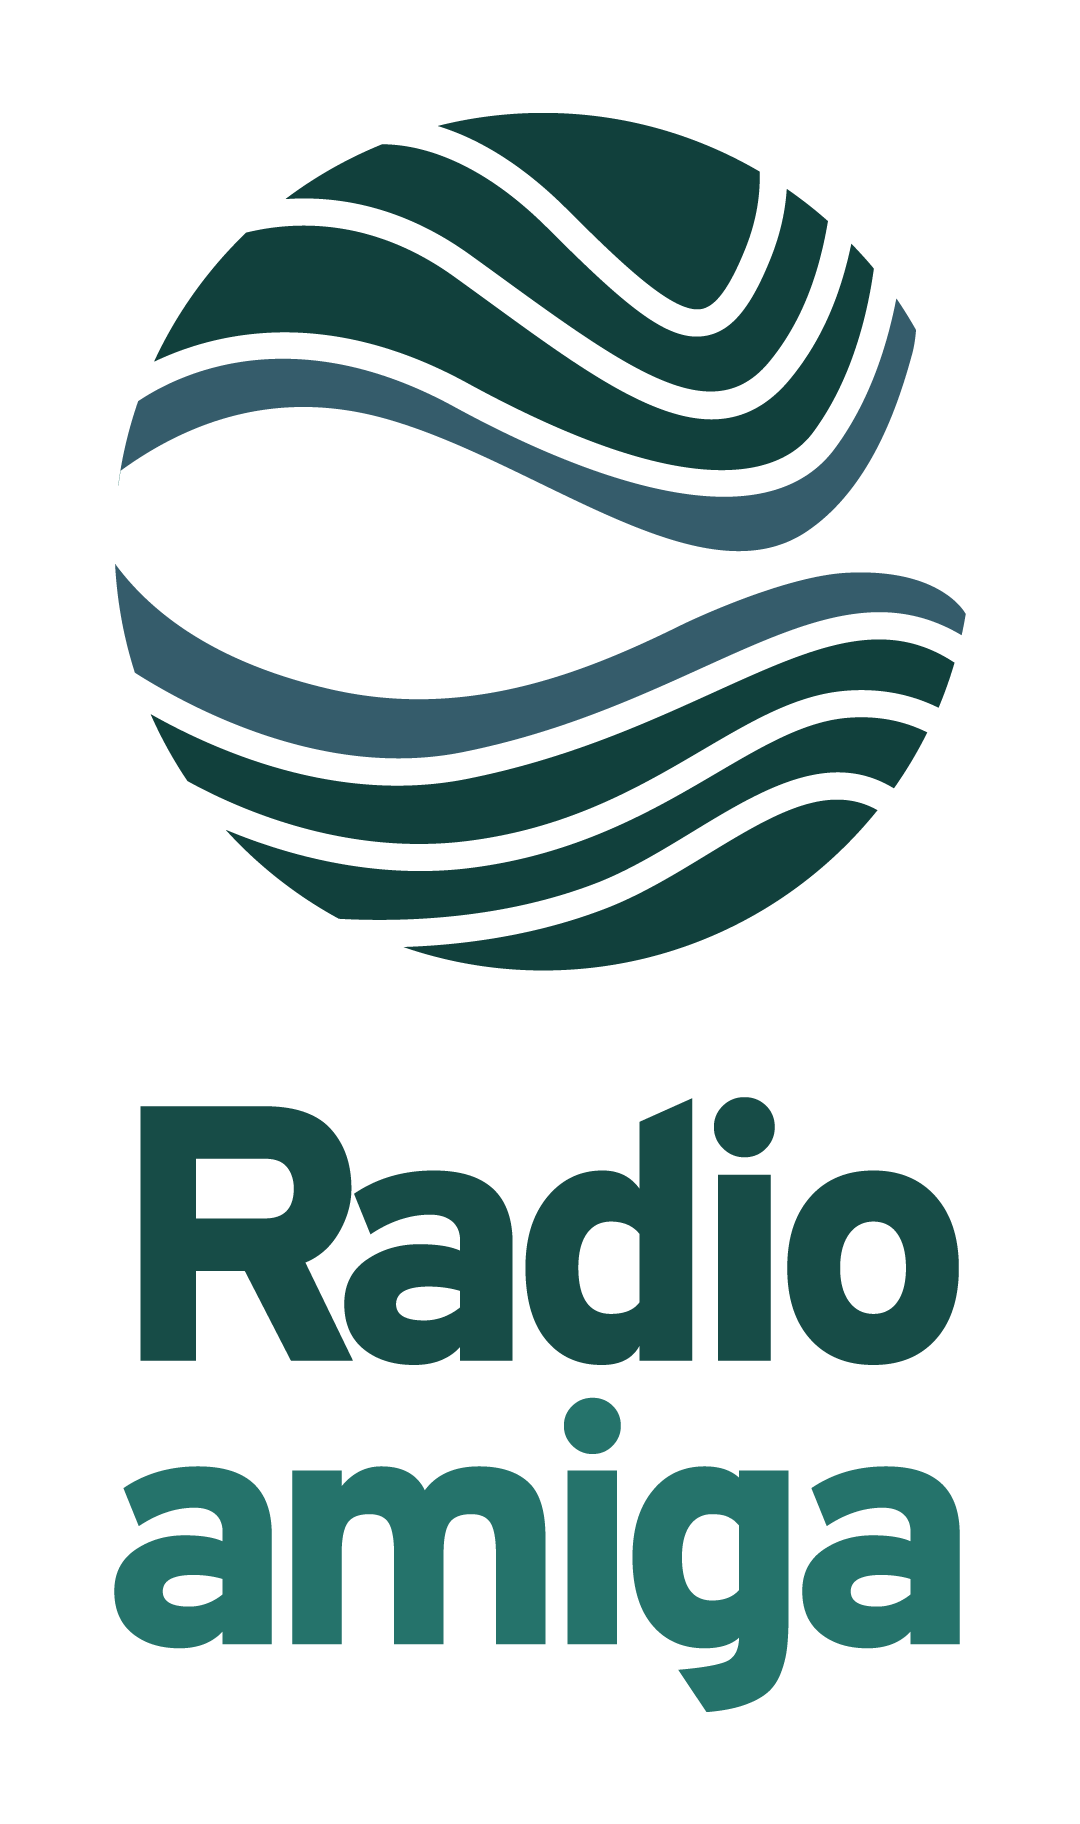 (c) Radioamigainternacional.com